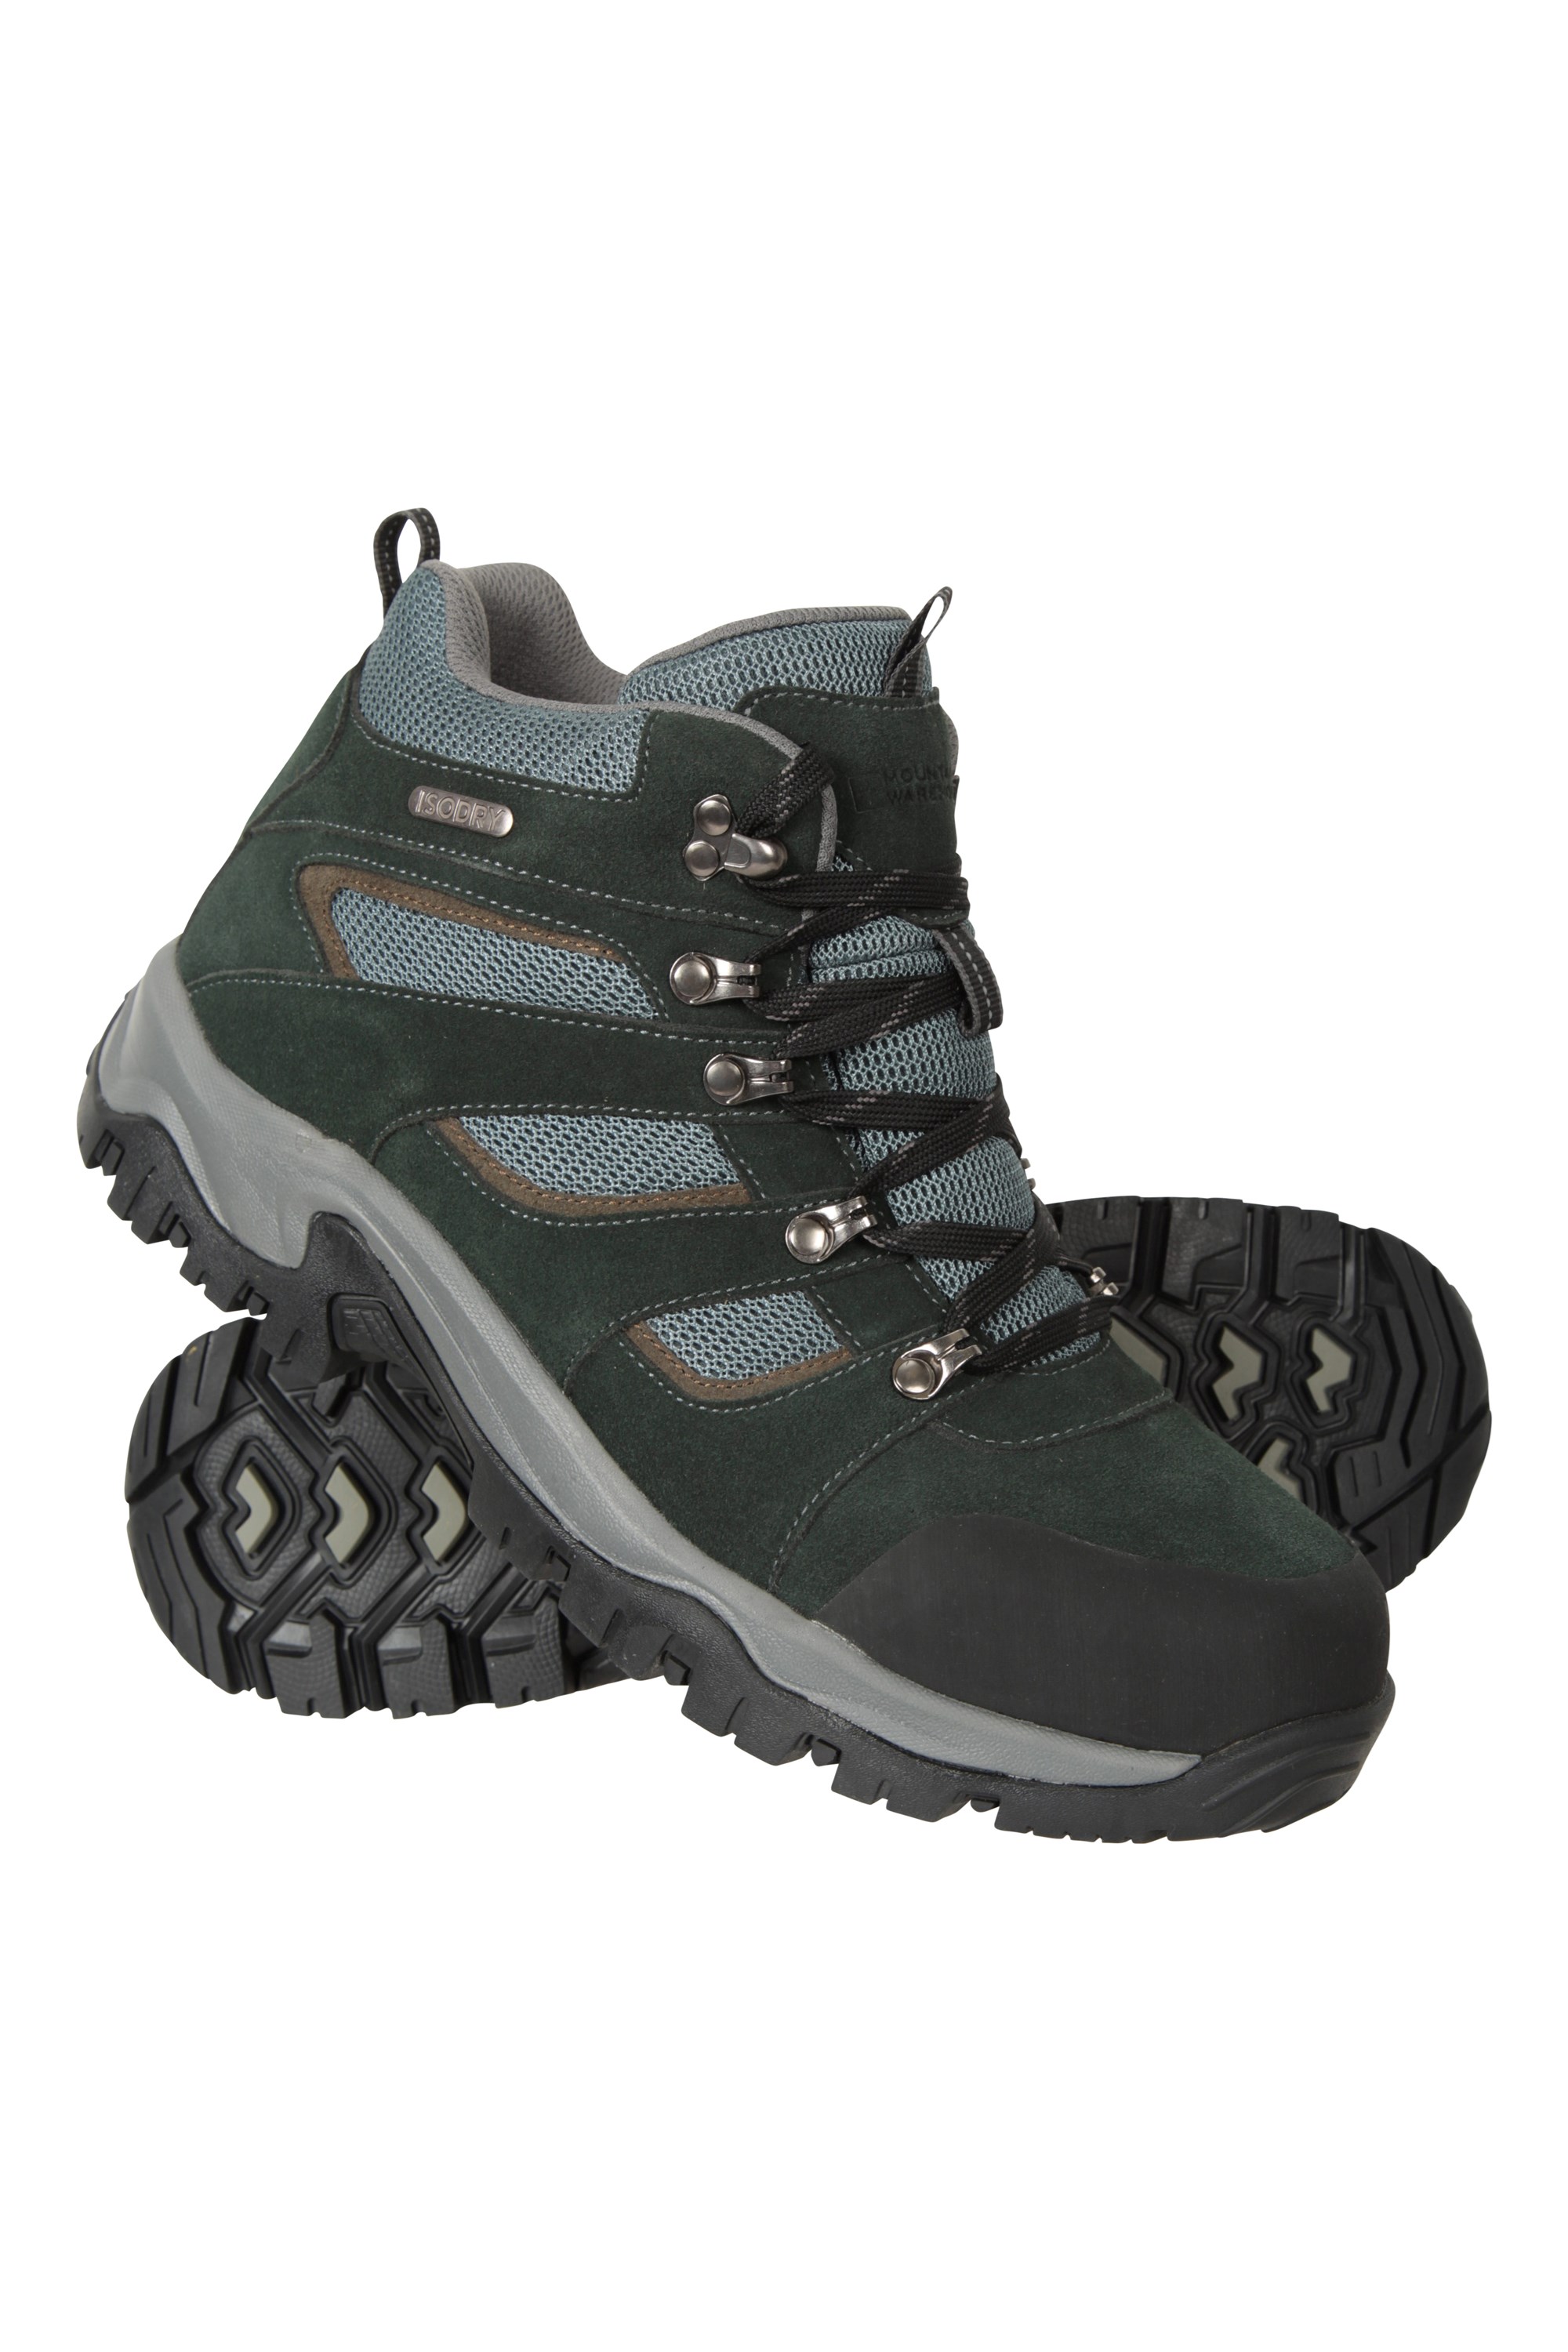 Voyage Mens Waterproof Walking Mid-Boots | Mountain Warehouse GB